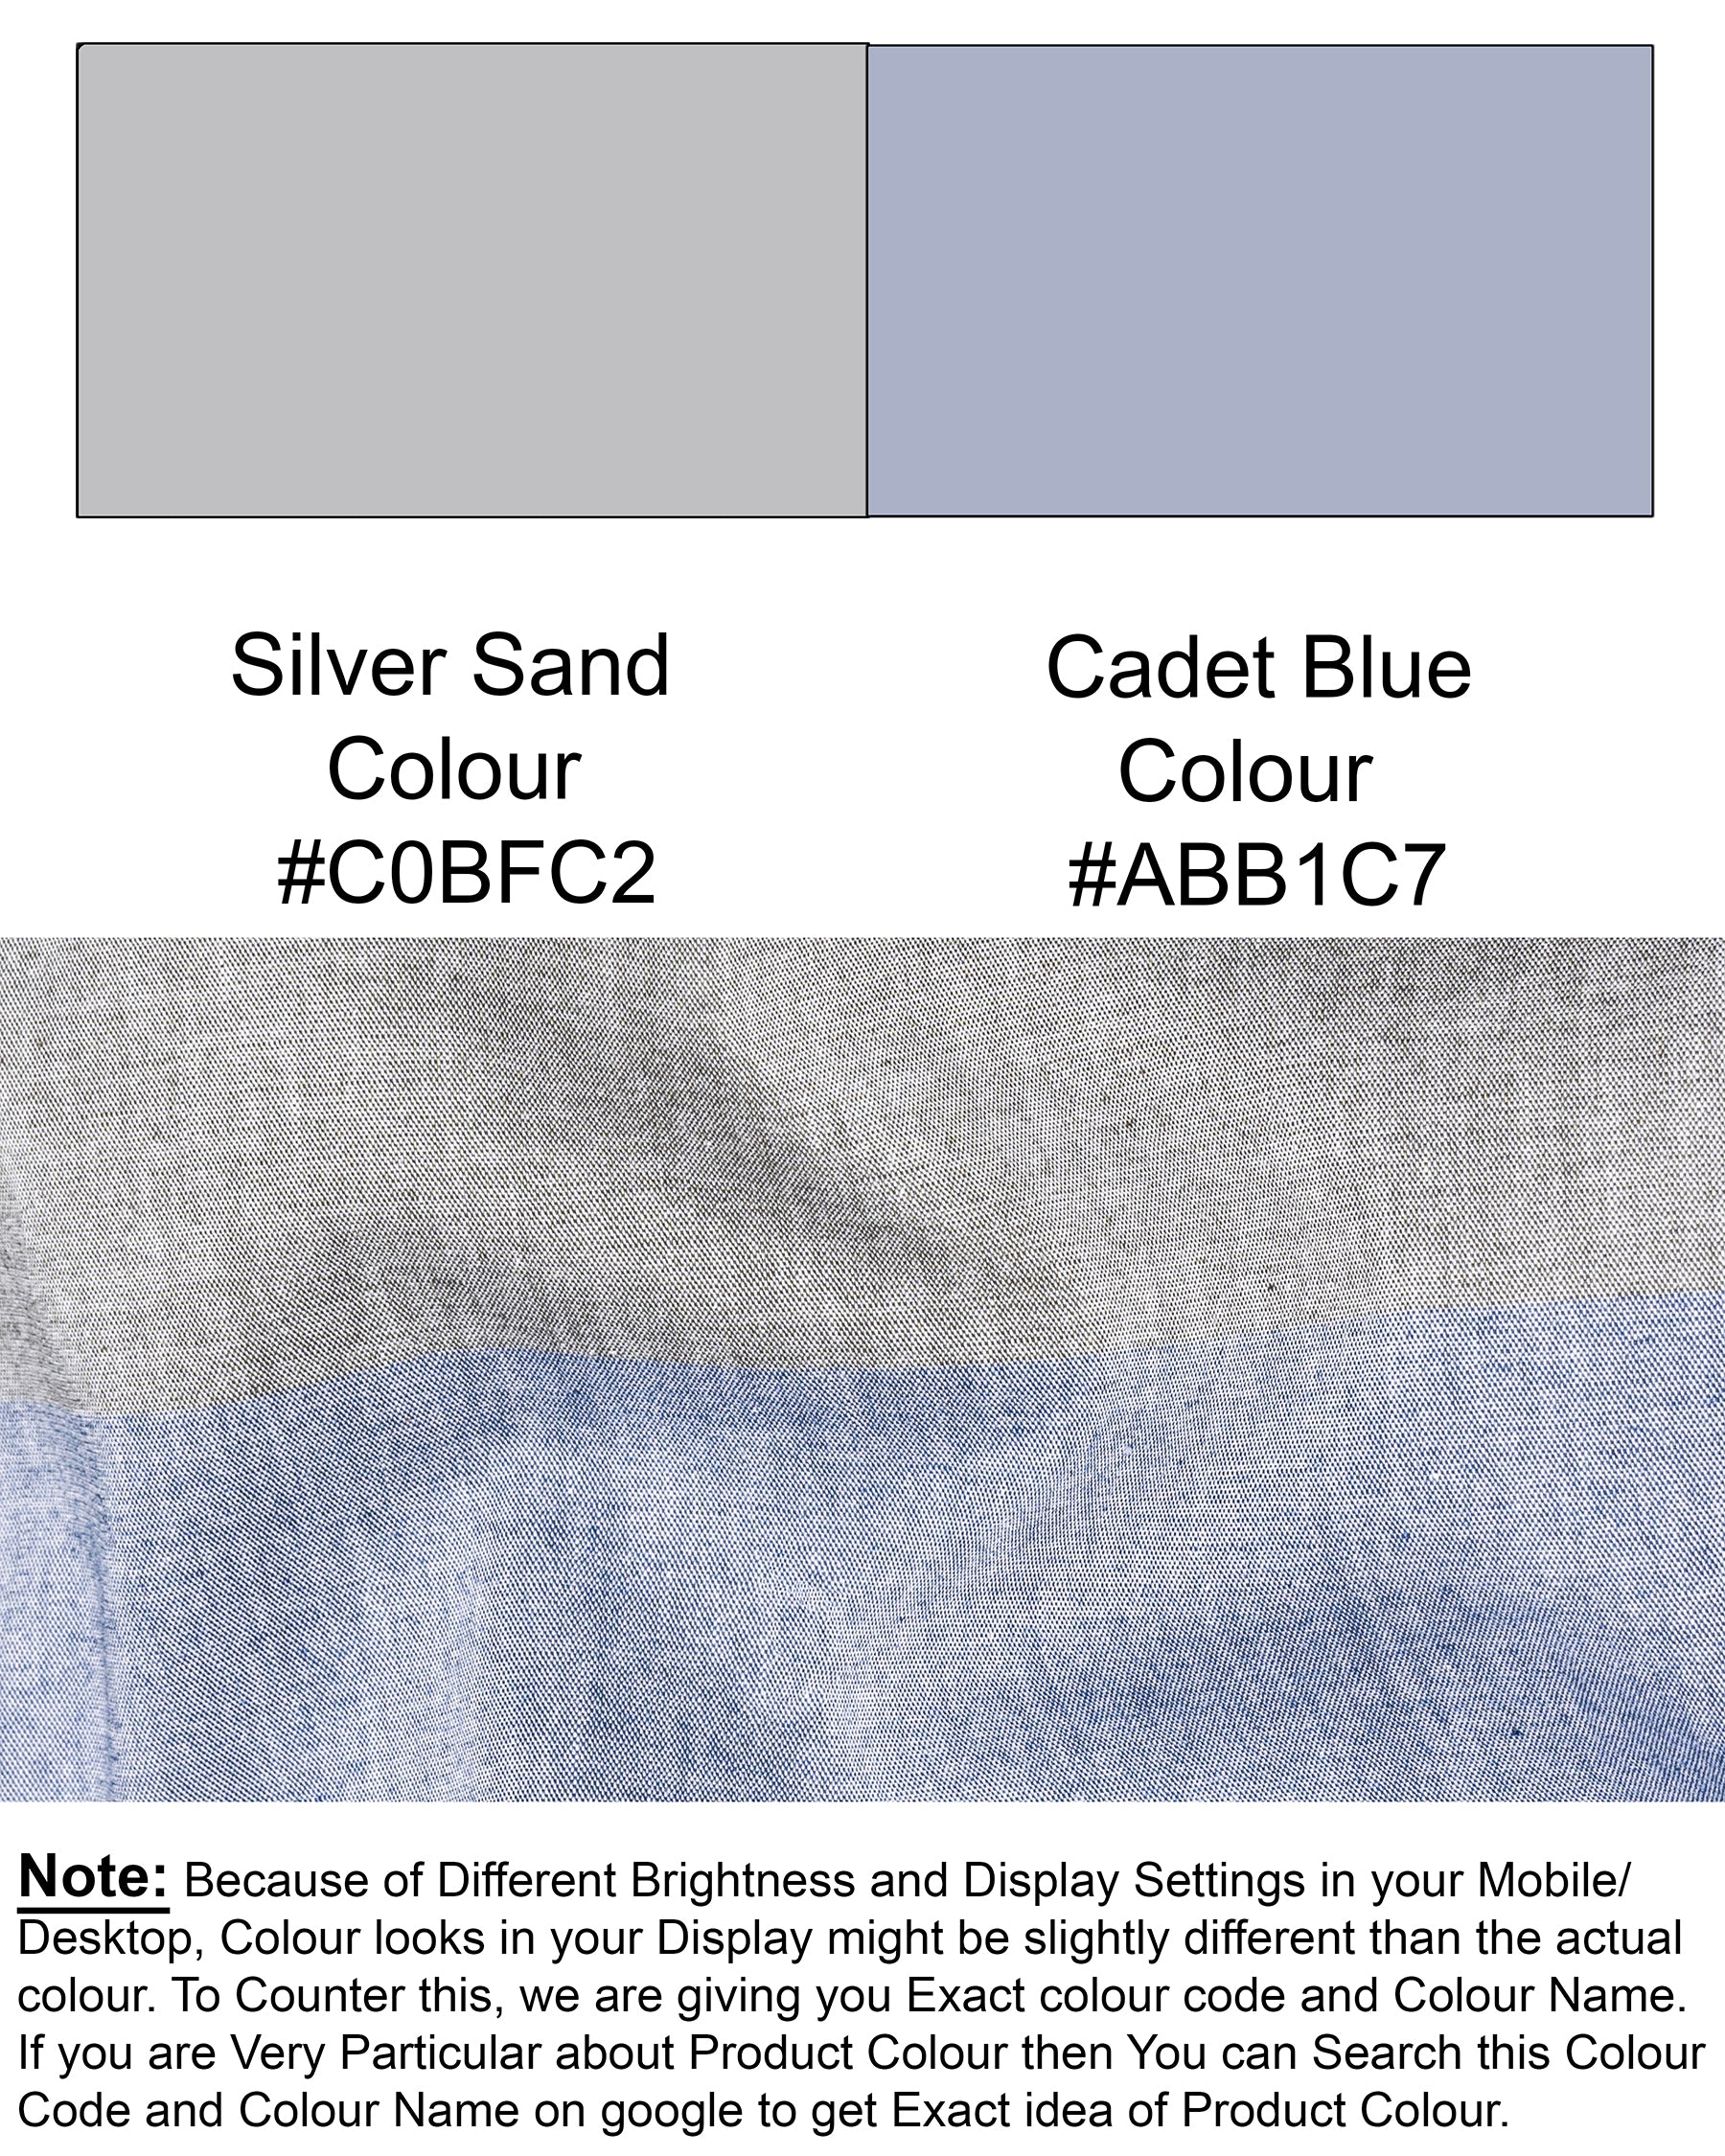 Silver Sand and Cadet Blue Premium Cotton Shirt 6585-BD-38,6585-BD-H-38,6585-BD-39,6585-BD-H-39,6585-BD-40,6585-BD-H-40,6585-BD-42,6585-BD-H-42,6585-BD-44,6585-BD-H-44,6585-BD-46,6585-BD-H-46,6585-BD-48,6585-BD-H-48,6585-BD-50,6585-BD-H-50,6585-BD-52,6585-BD-H-52